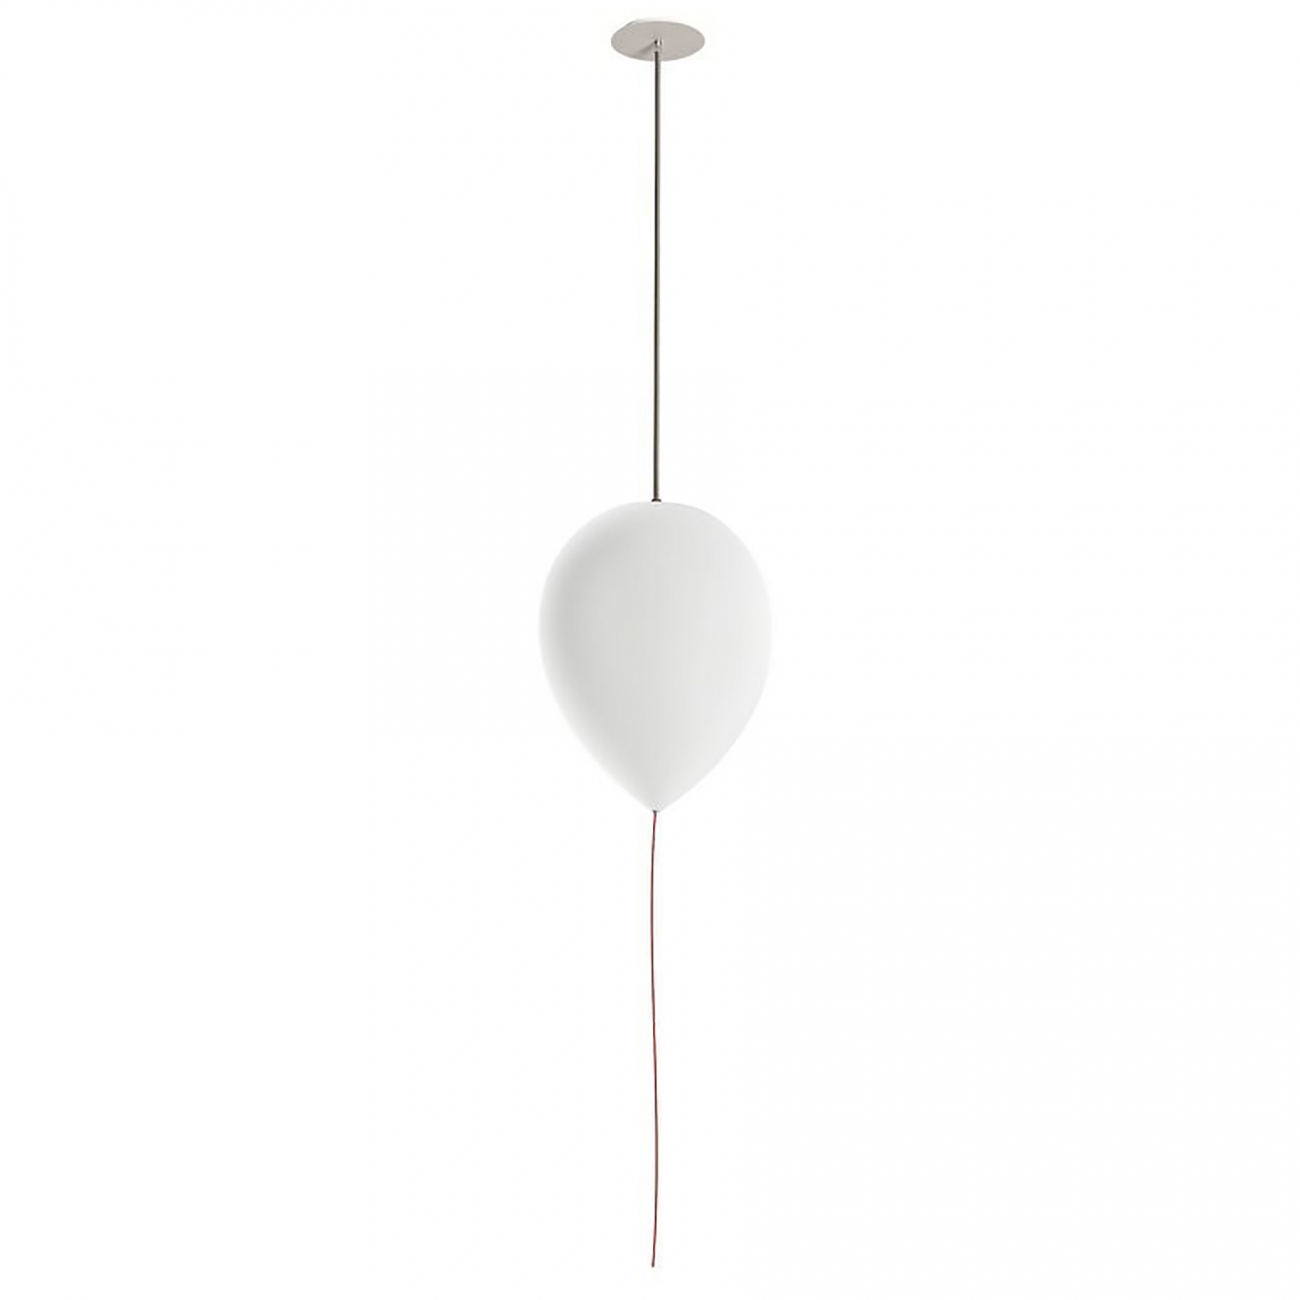 Estiluz Balloon pendant lamp